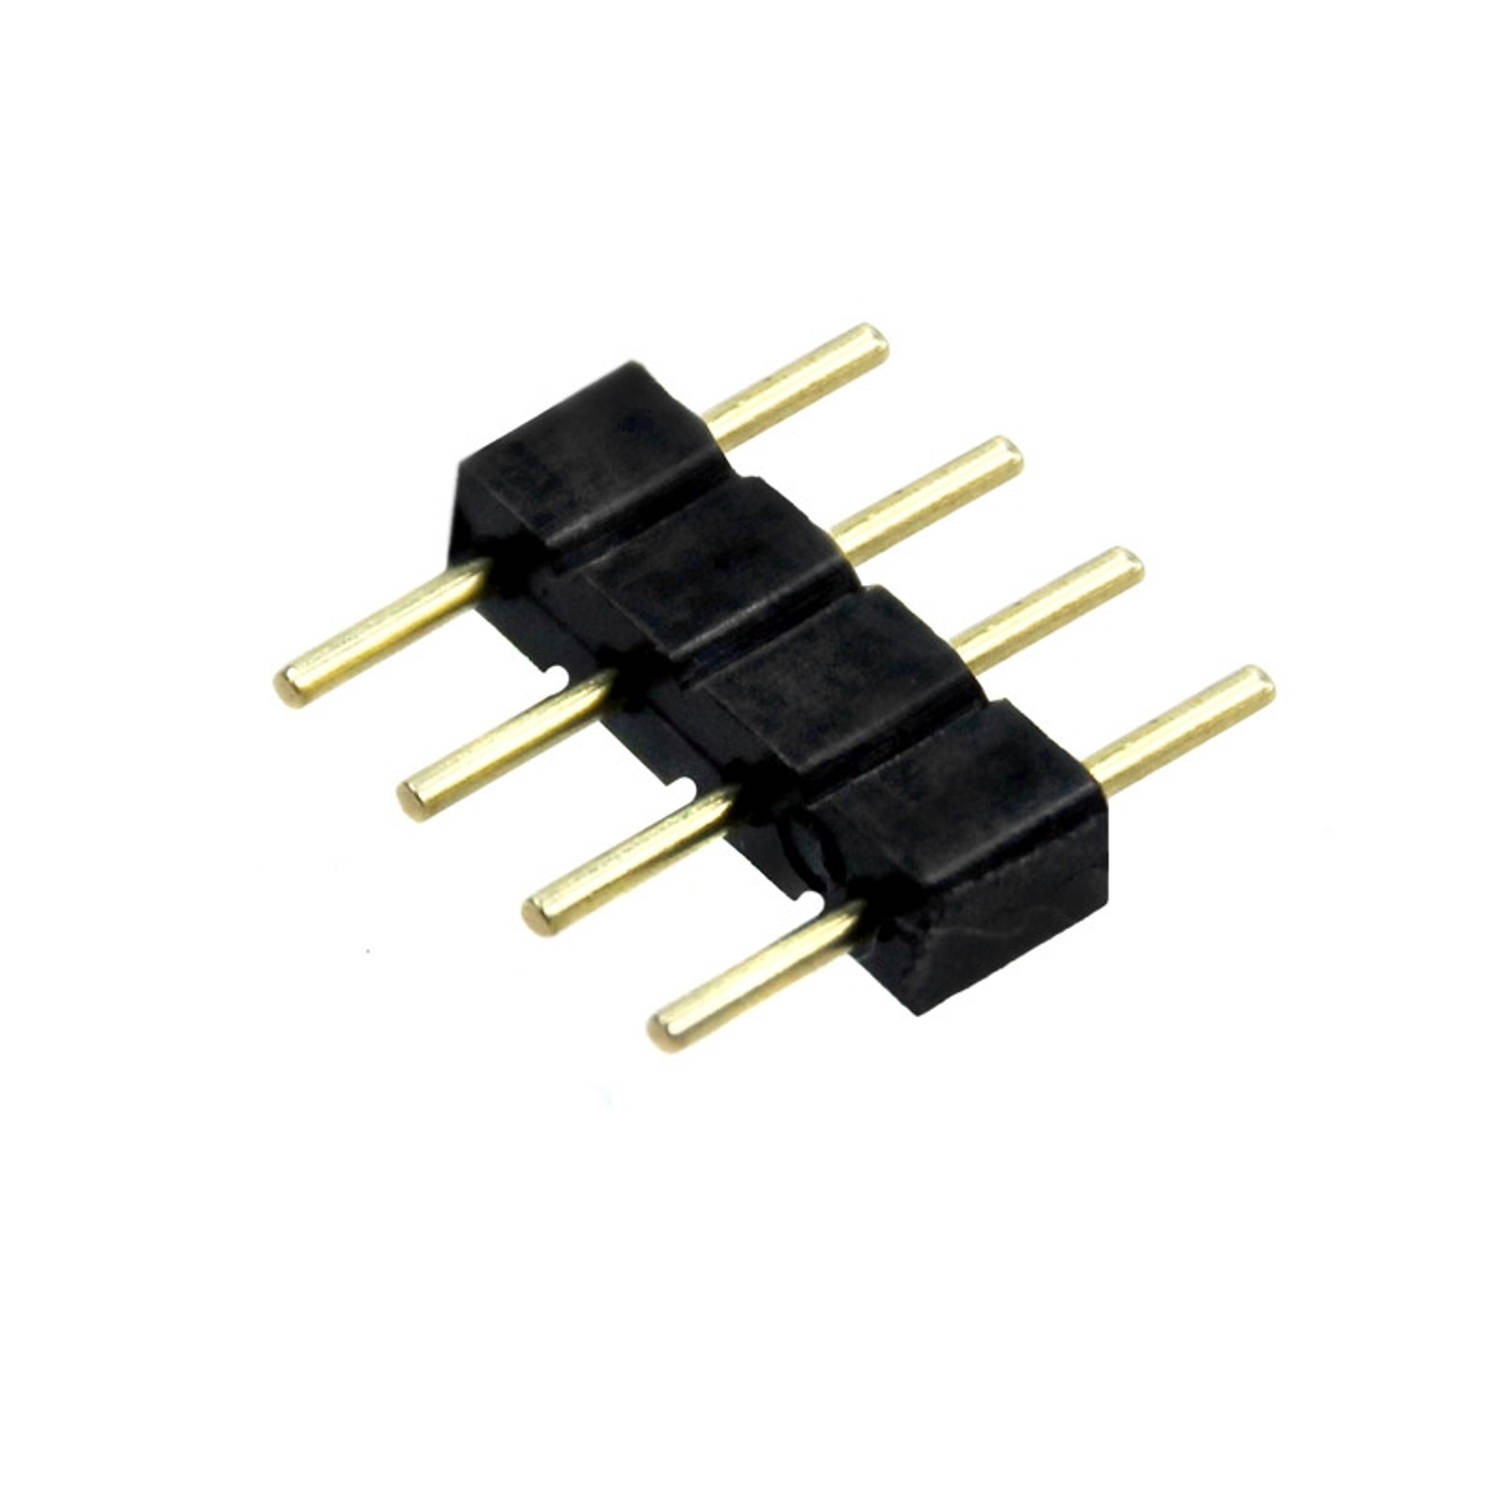 LED-strookconnector 4-pins voor RGB-strips